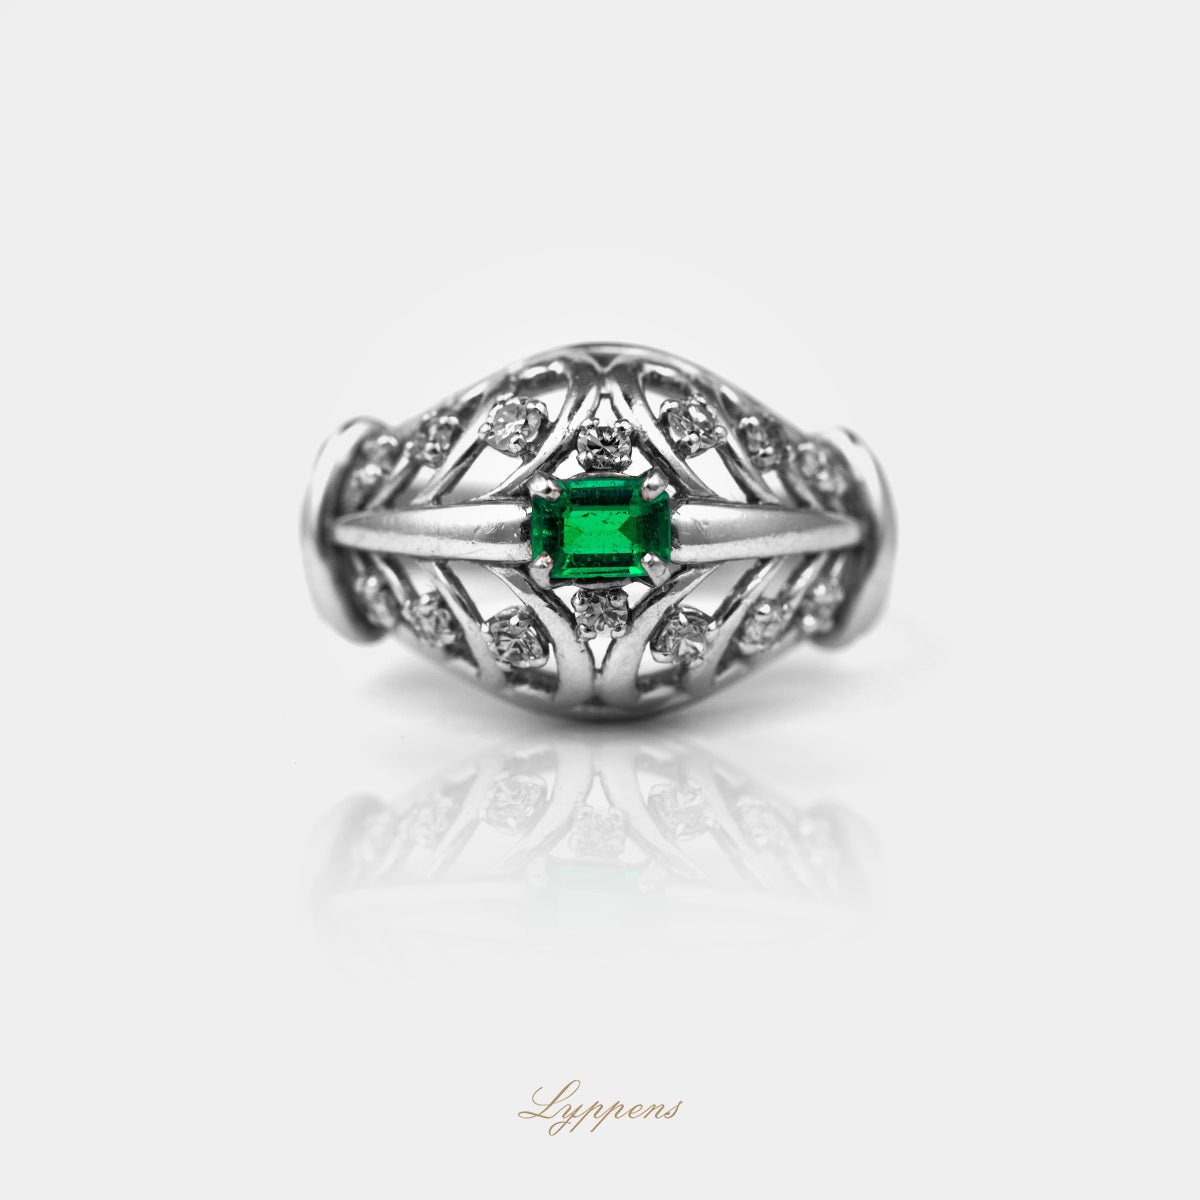 Liggende vintage ring met emerald geslepen smaragd en diamant.